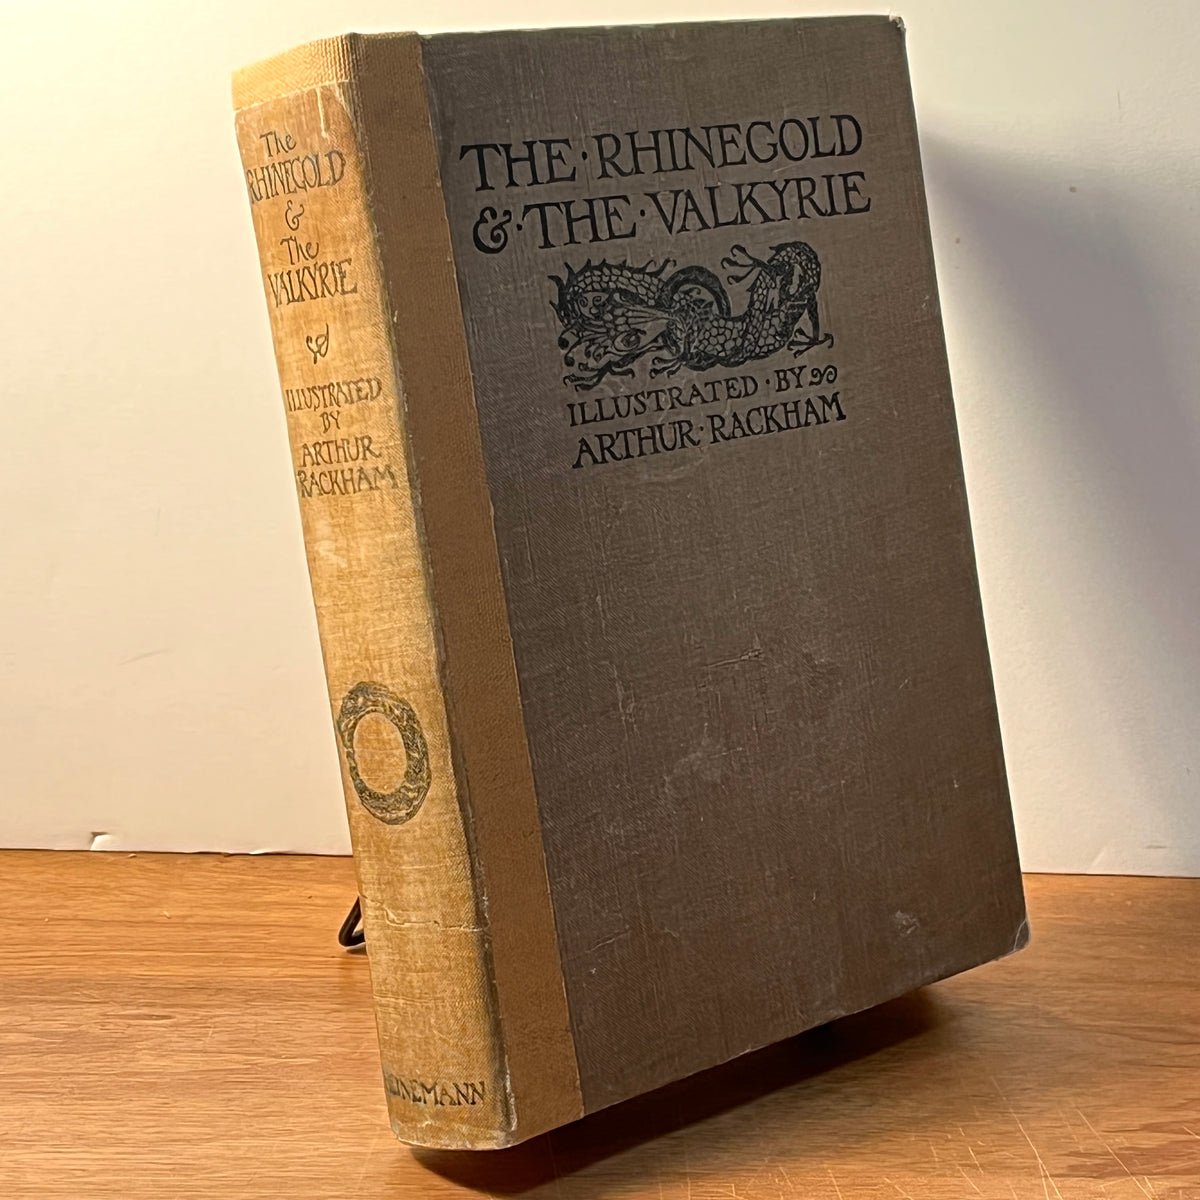 The Rhinegold & The Valkyrie, Richard Wagner, Arthur Rackham, 1928, Very Good